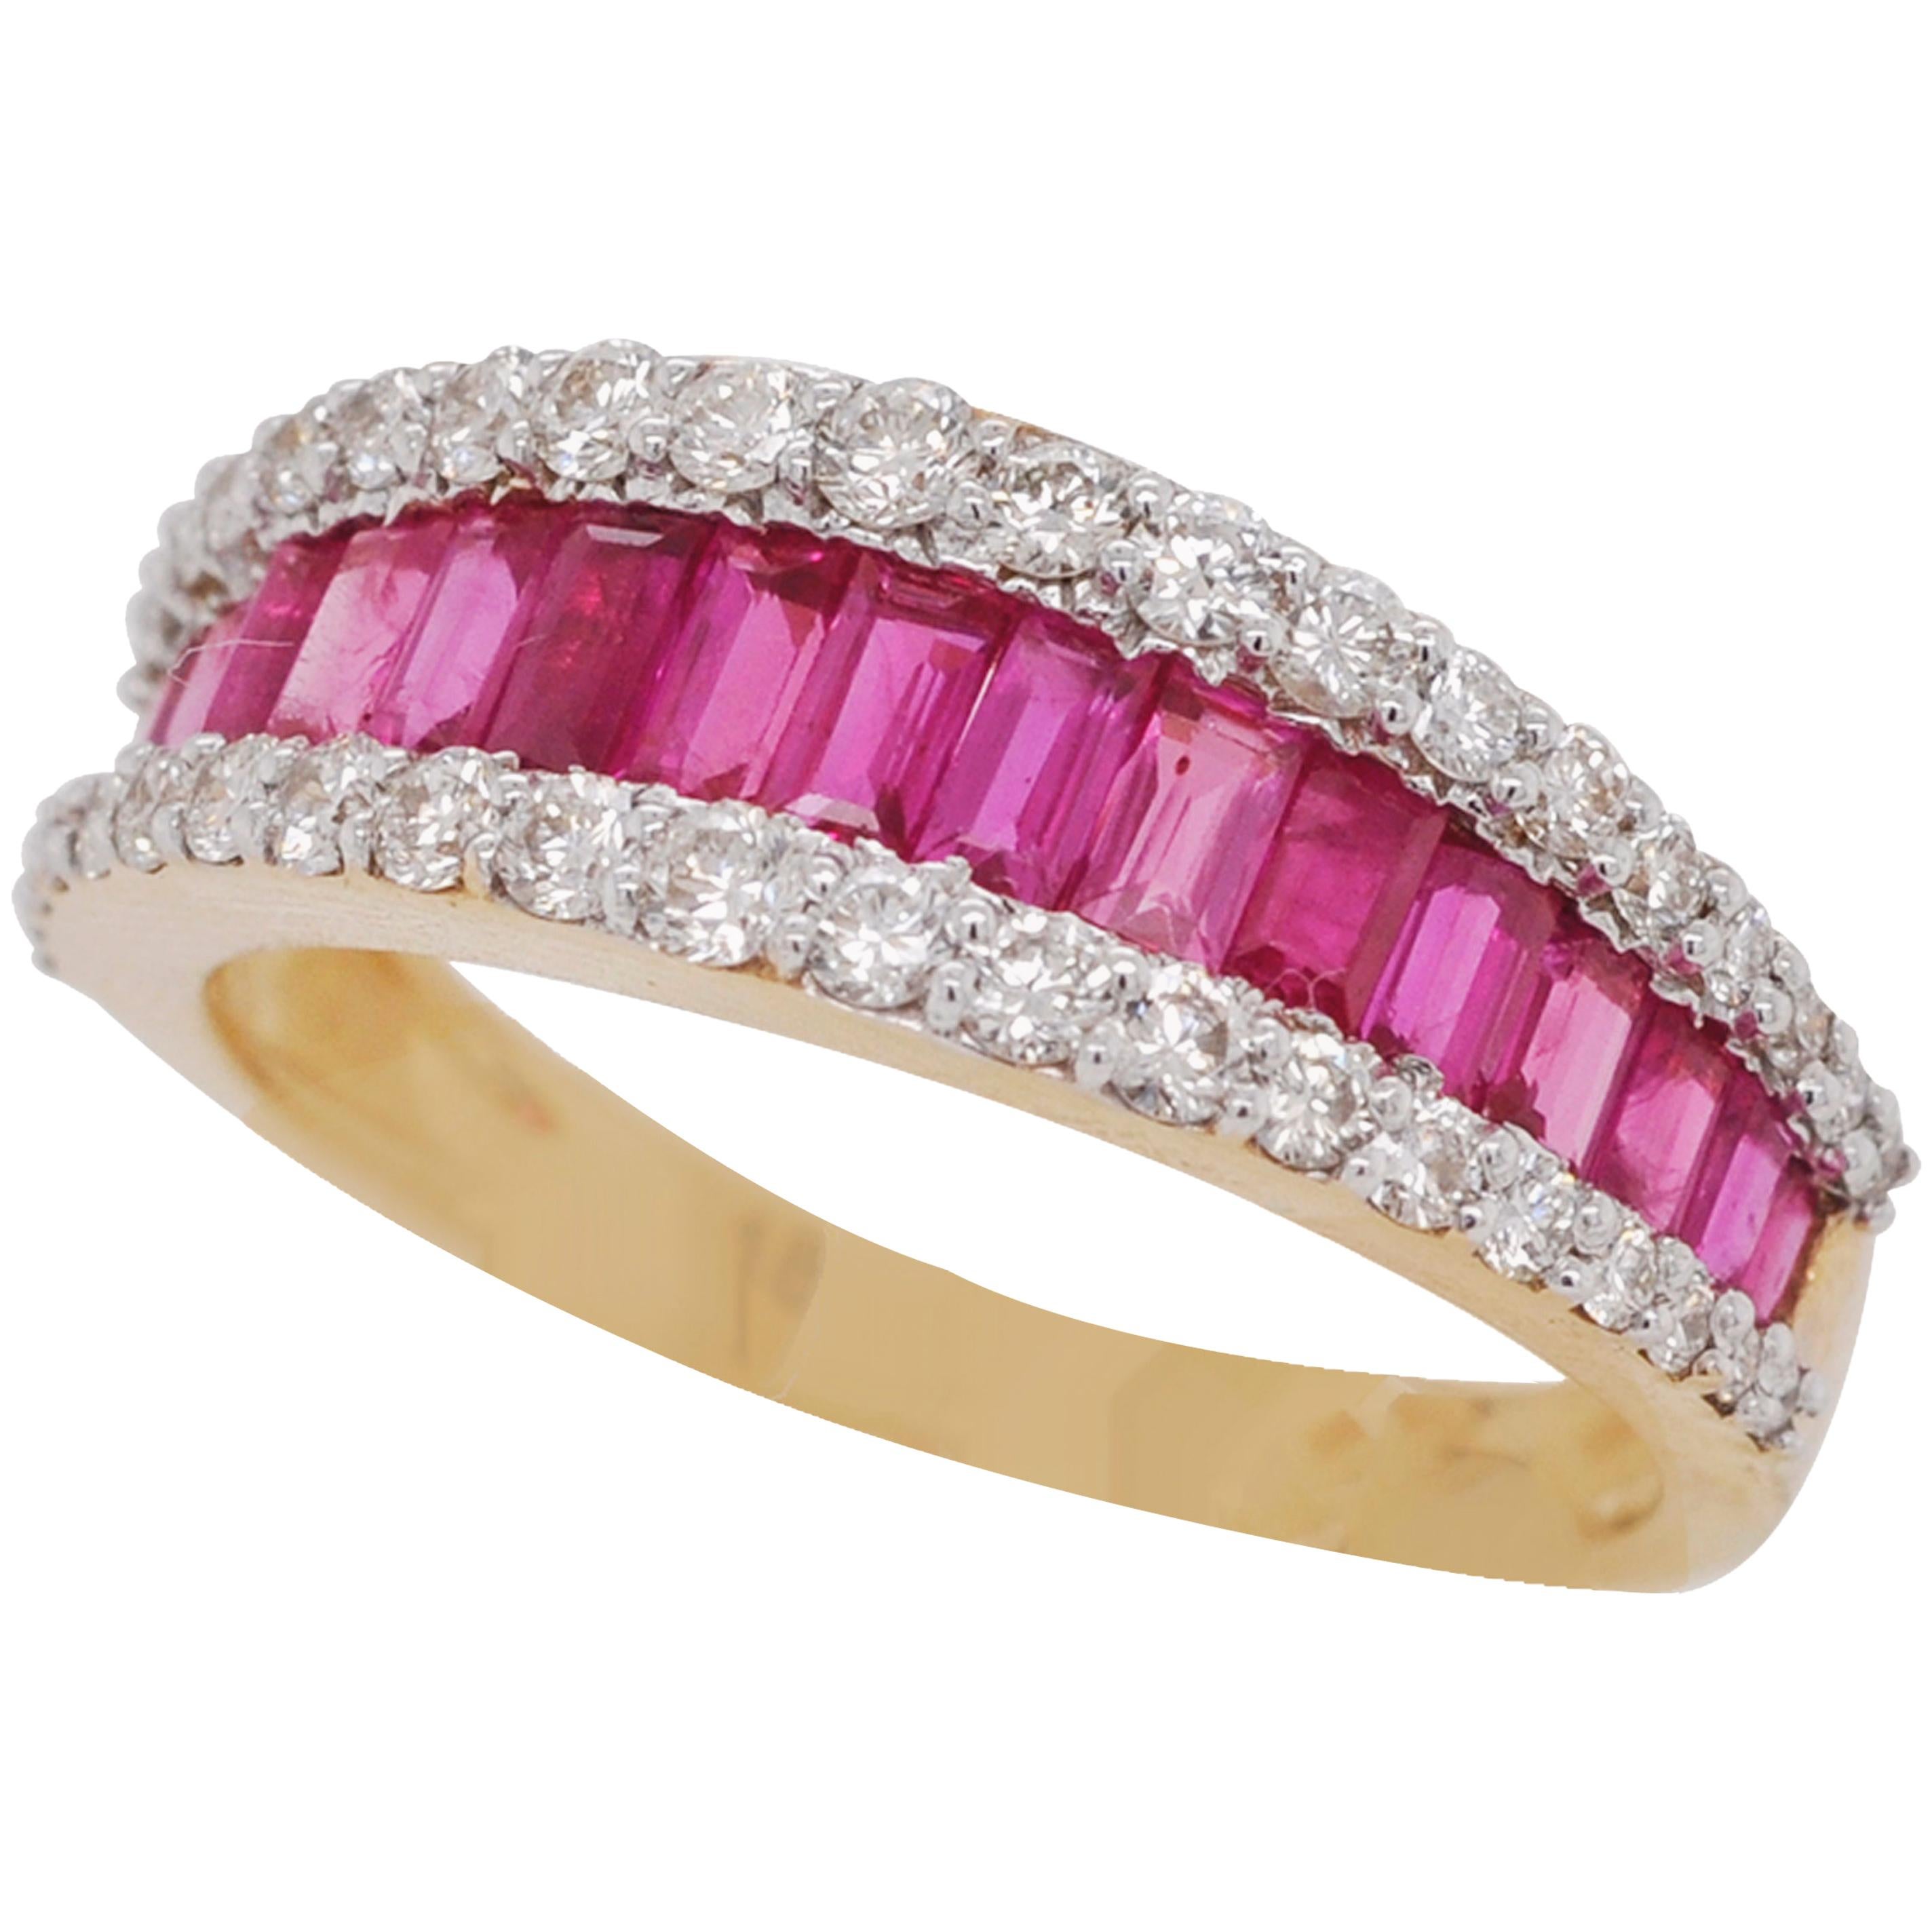 18 Karat Gold Channel Set Ruby Baguette Diamond Contemporary Wedding Band Ring